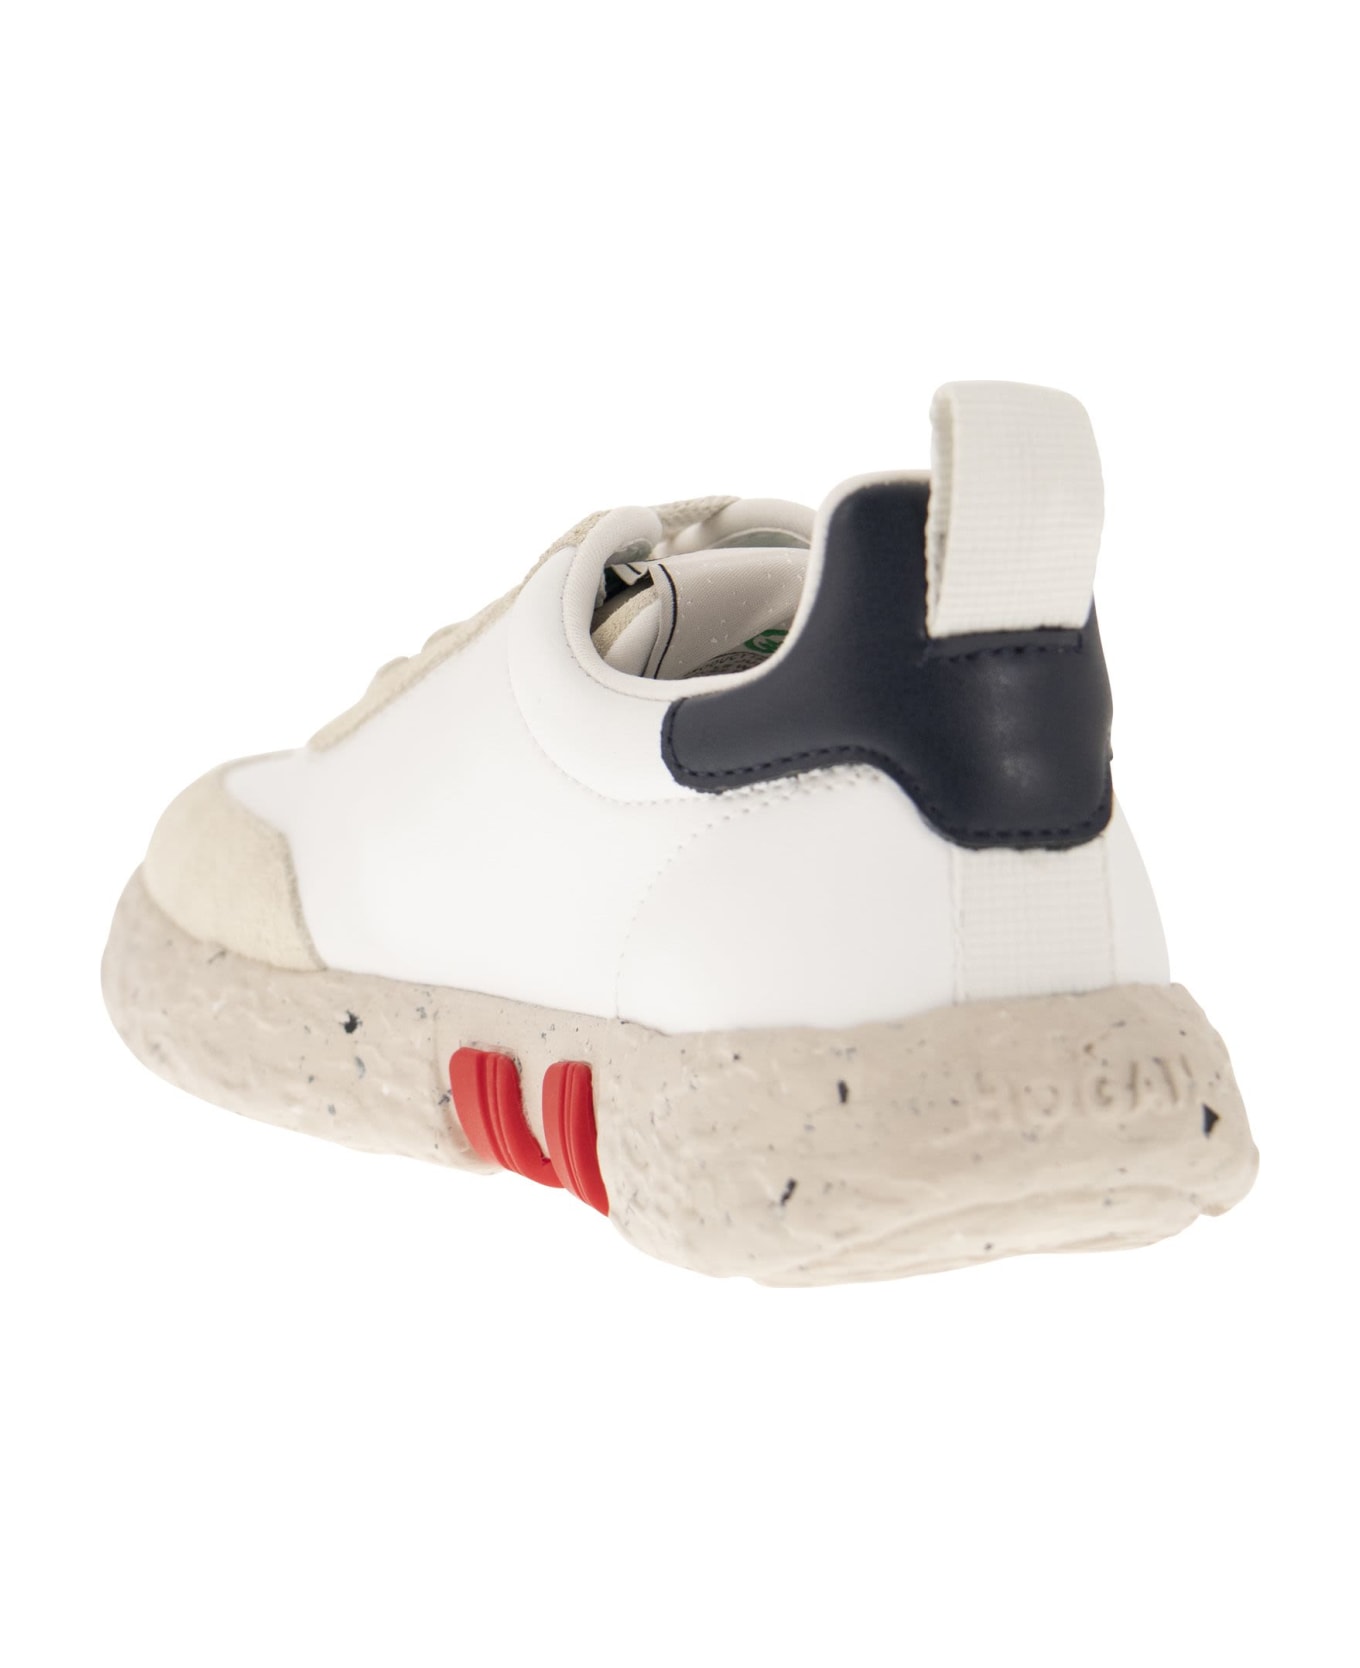 Hogan Sneakers -3r - White/red/blue シューズ